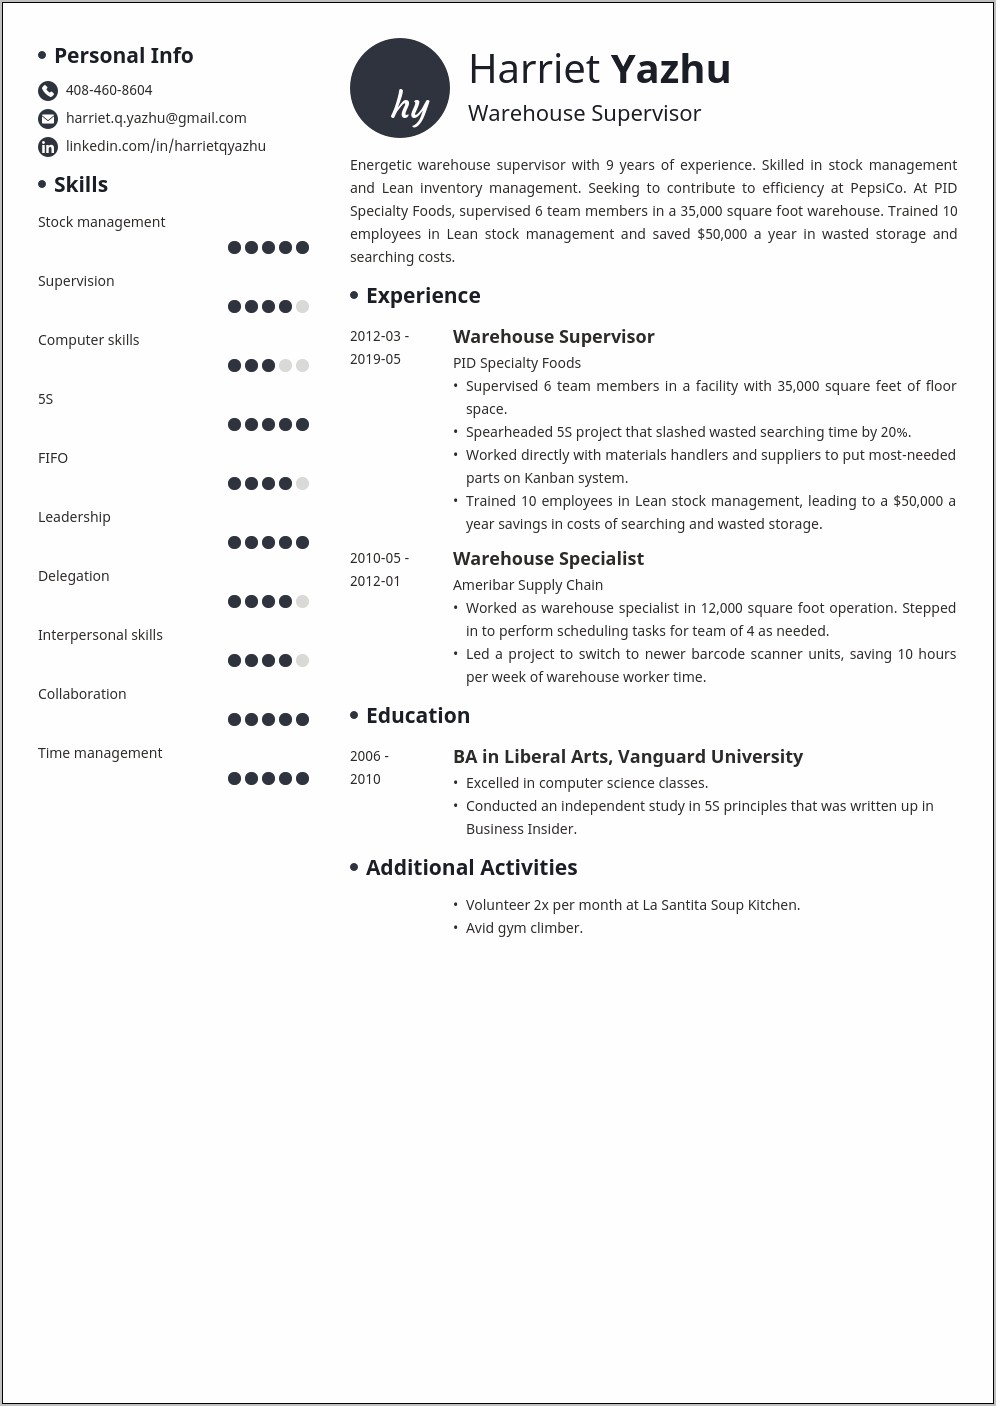 Restaurant Shift Manager Job Description For Resume